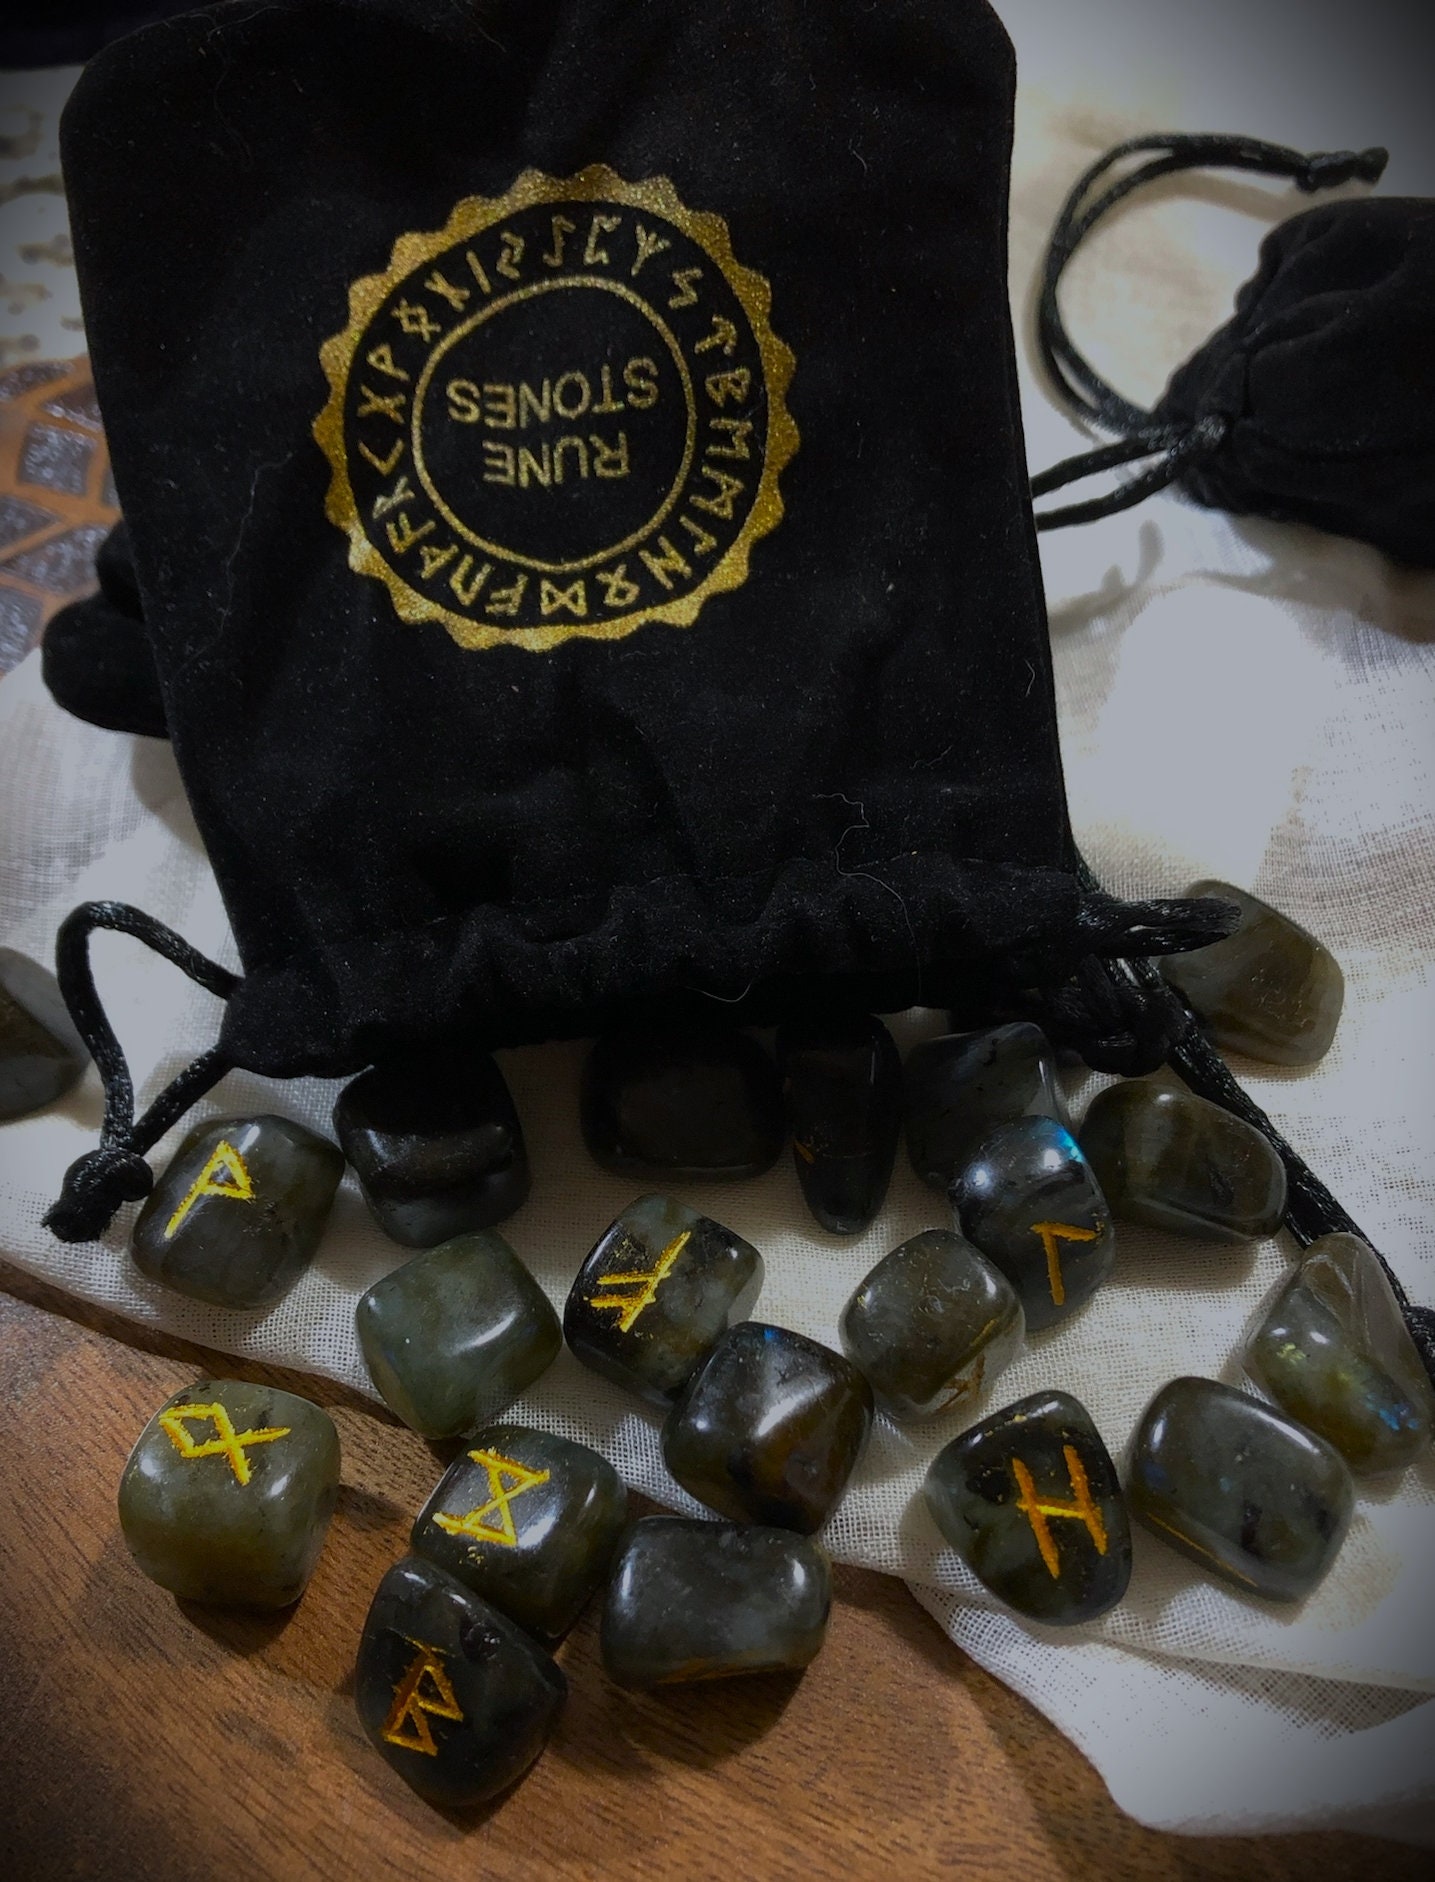 Crocon Labradorite Rune Stones Set Engraved with Elder futhark Crystal  Runes Set, Reiki Healing runas for Meditation Chakra Balancing, Rune Stone  for